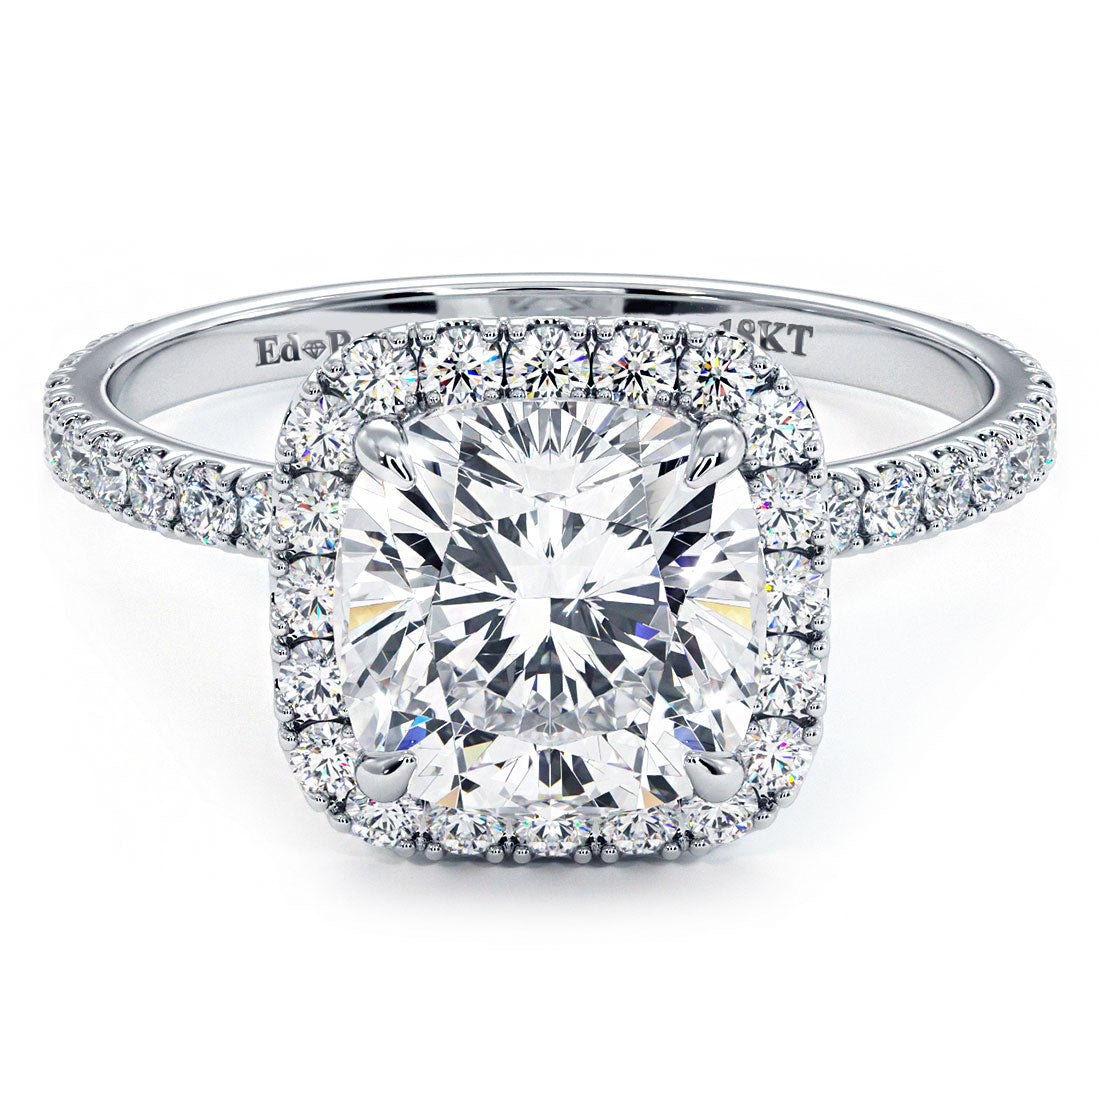 Cushion Halo Petite Micropavé Diamond Engagement Ring Setting